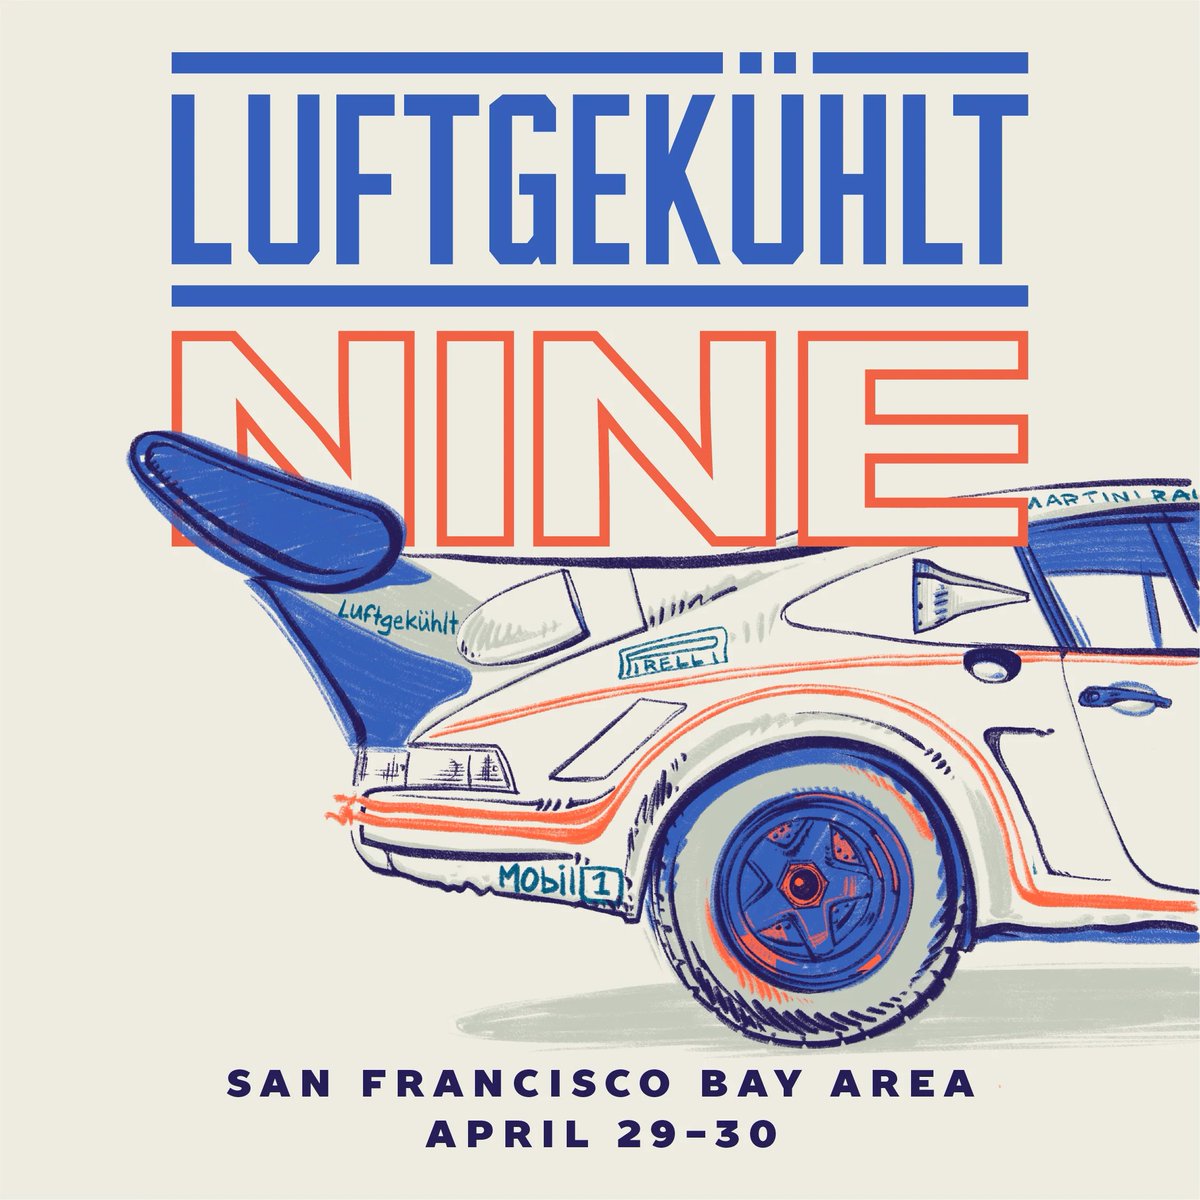 Aircooled Porsche extravaganza Luftgekuhlt is going to San Francisco dlvr.it/Sj6lQr